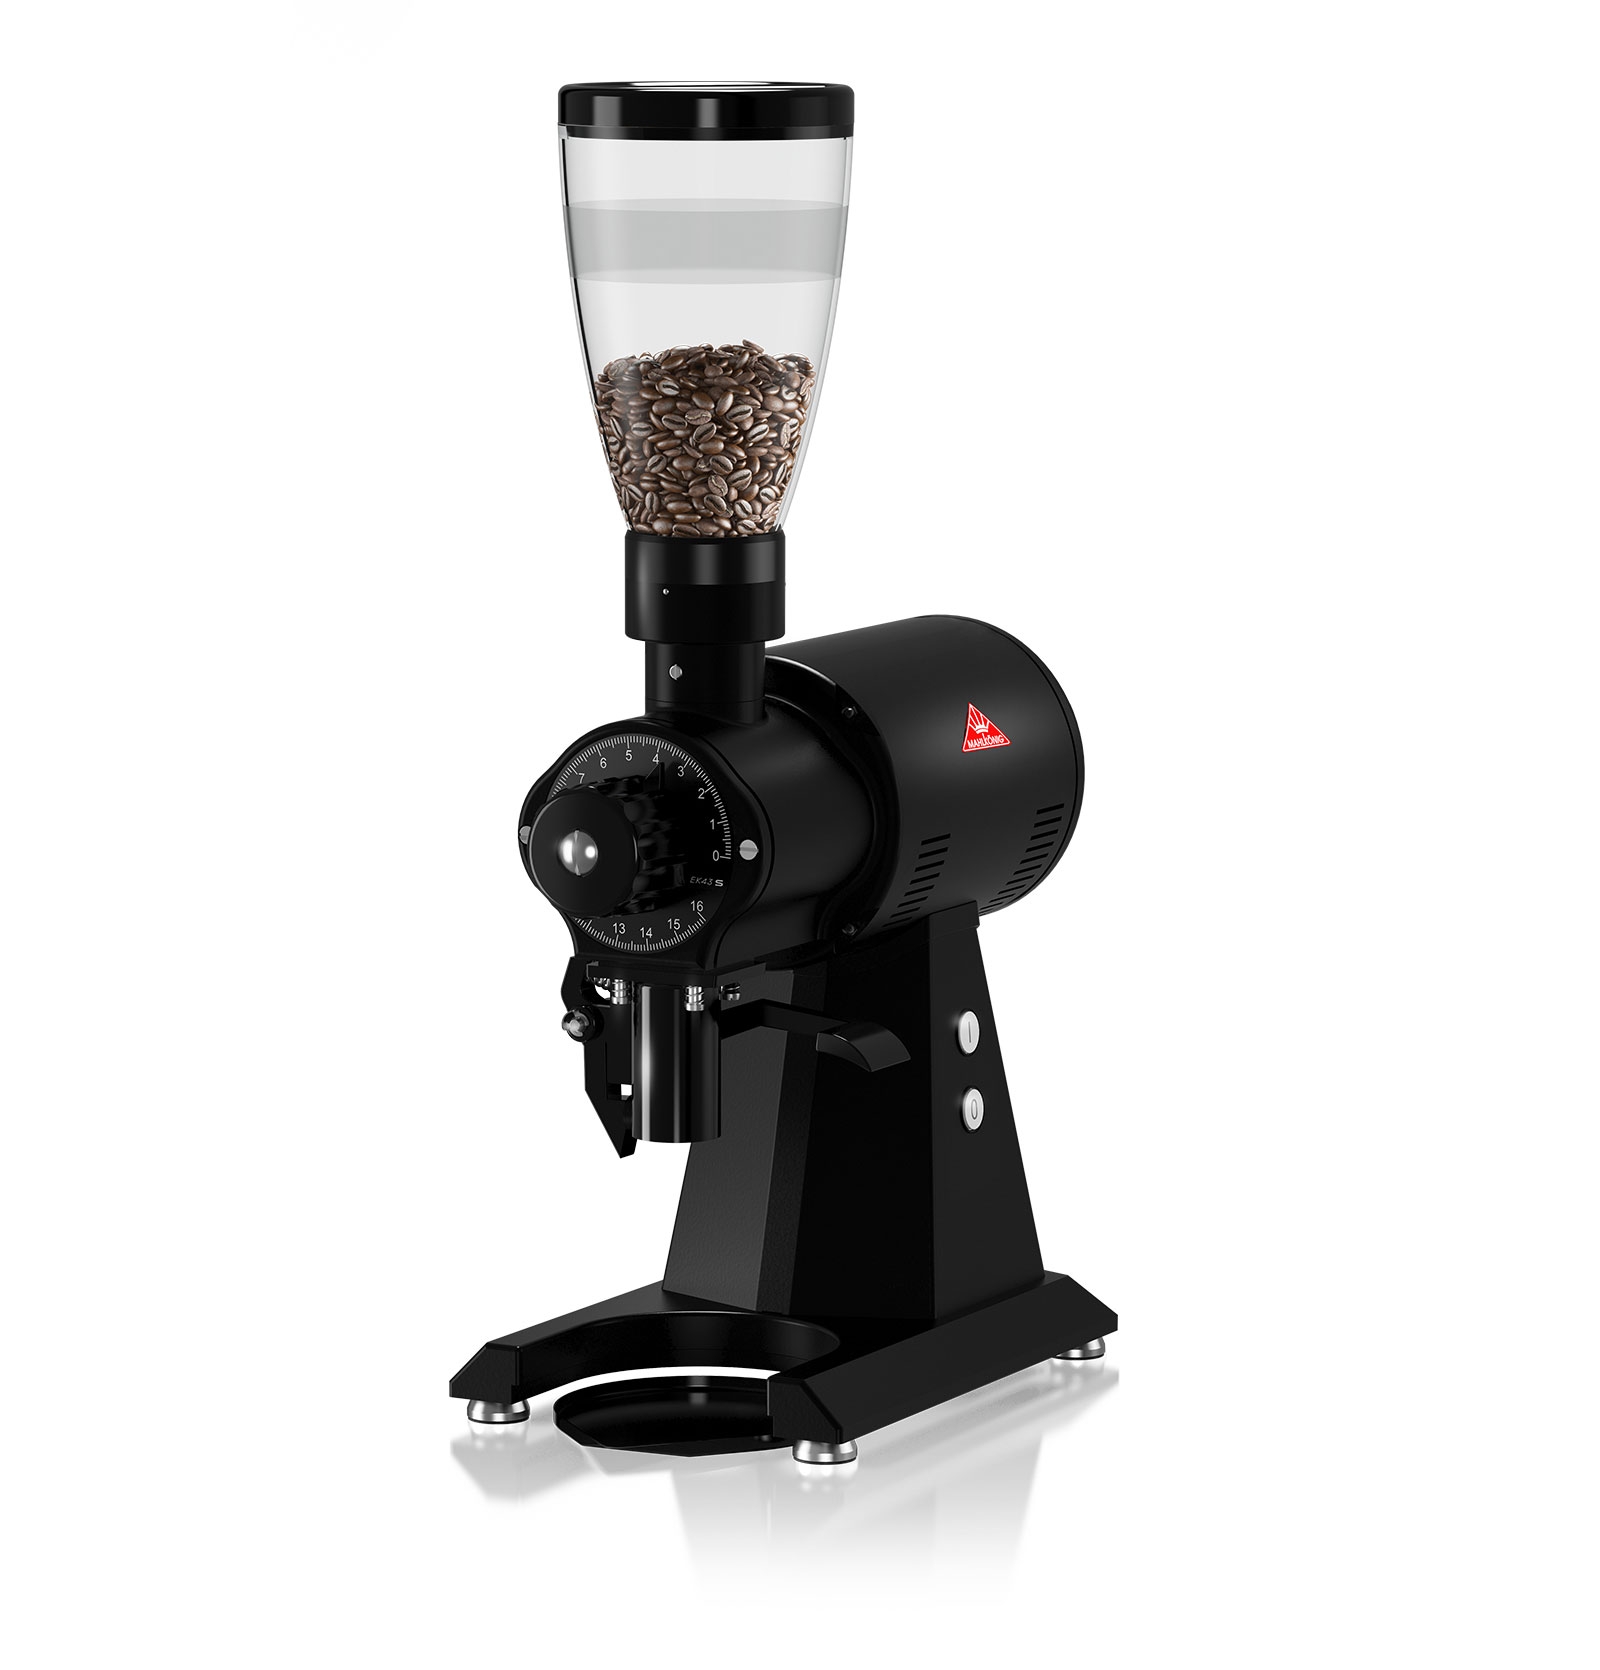 Mahlkönig EK43 S Espresso- & Kaffeemühle weiss matt